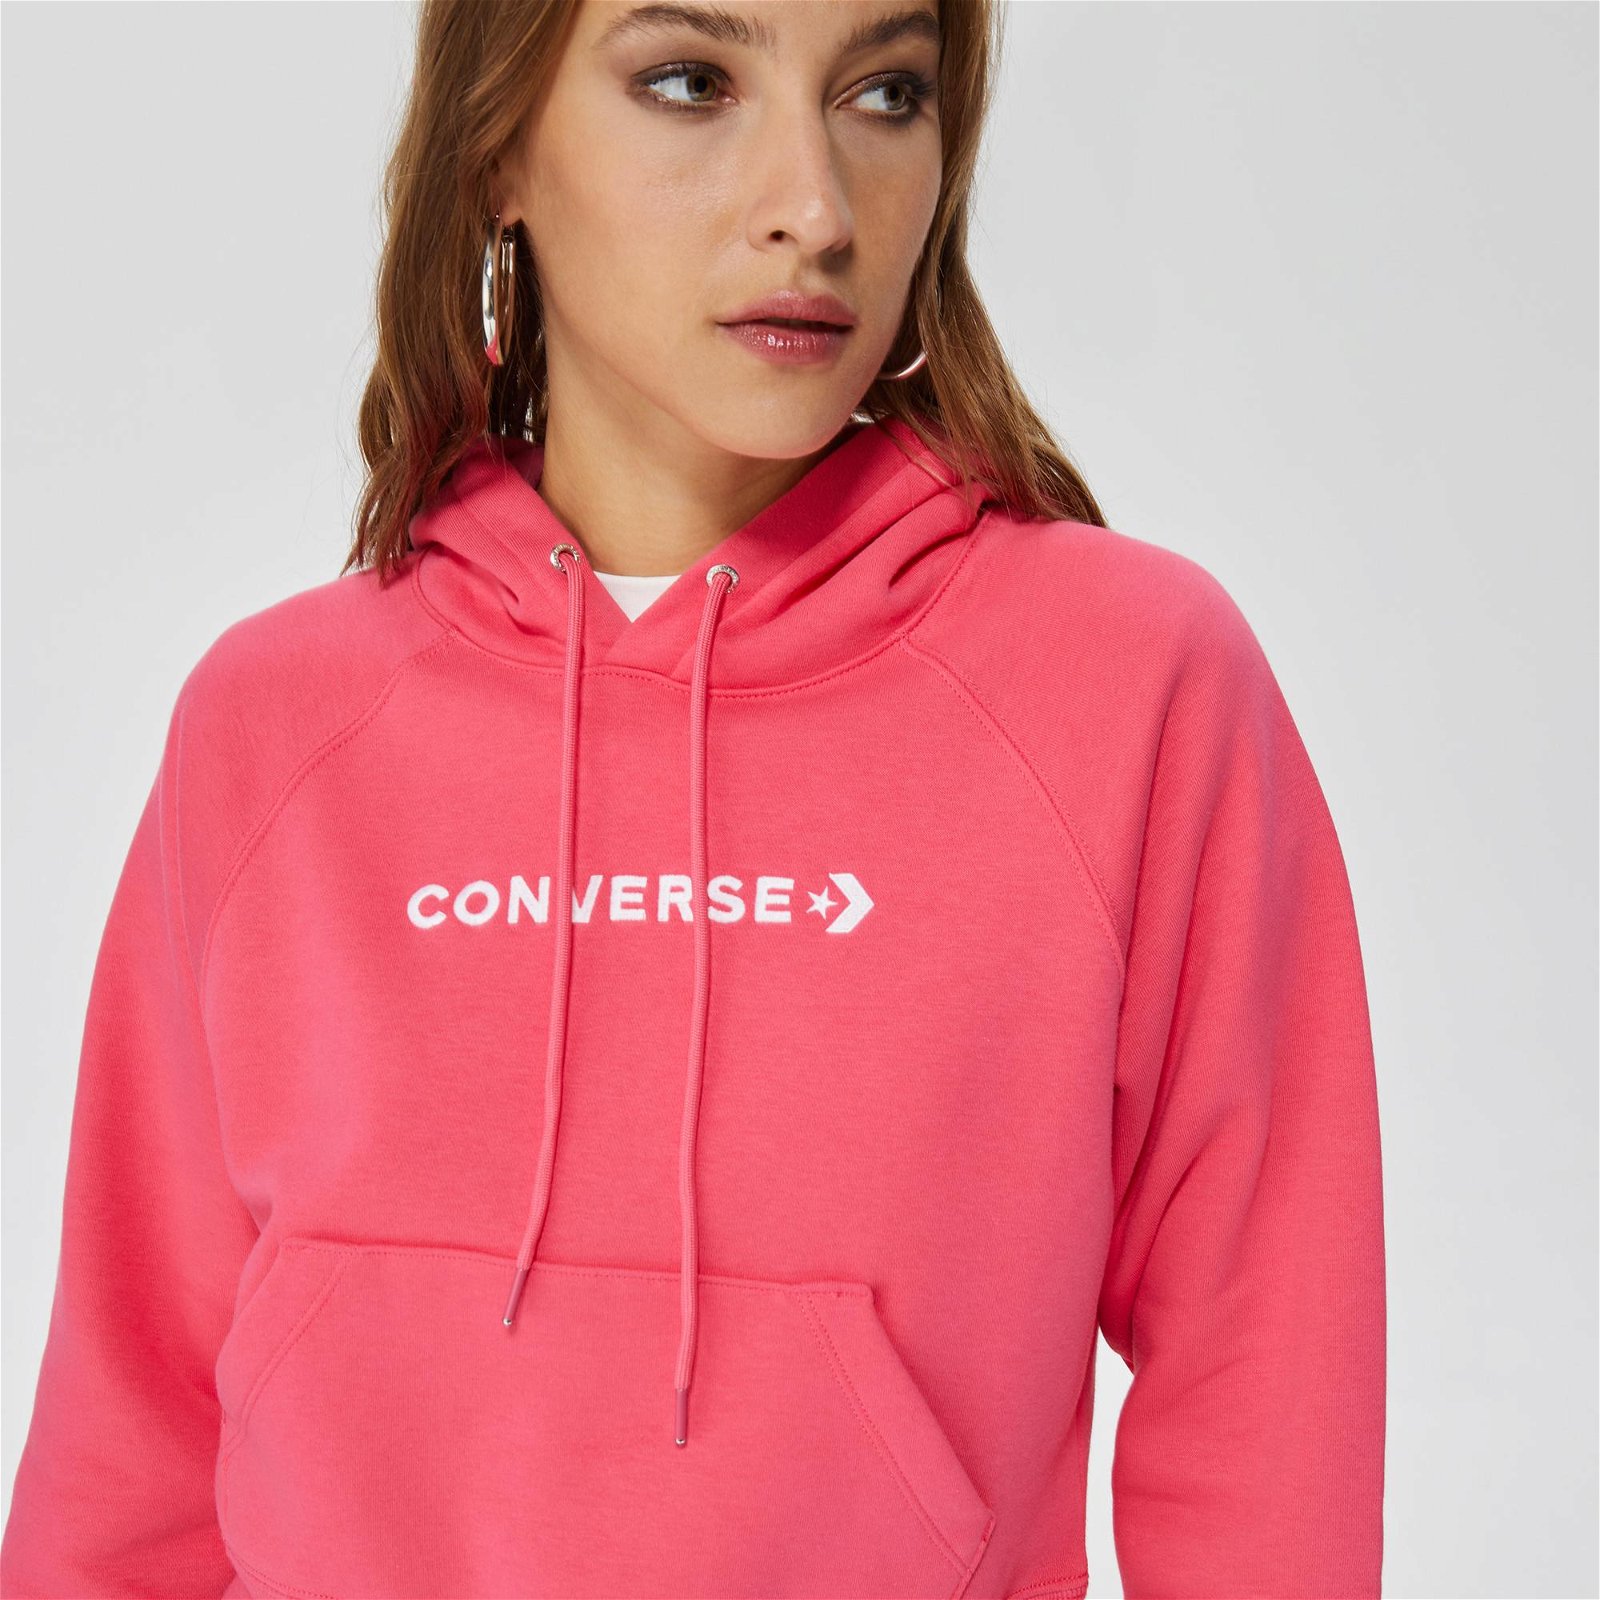 Converse Wordmark Fleece Pullover Hoodie Kadın Pembe Sweatshirt